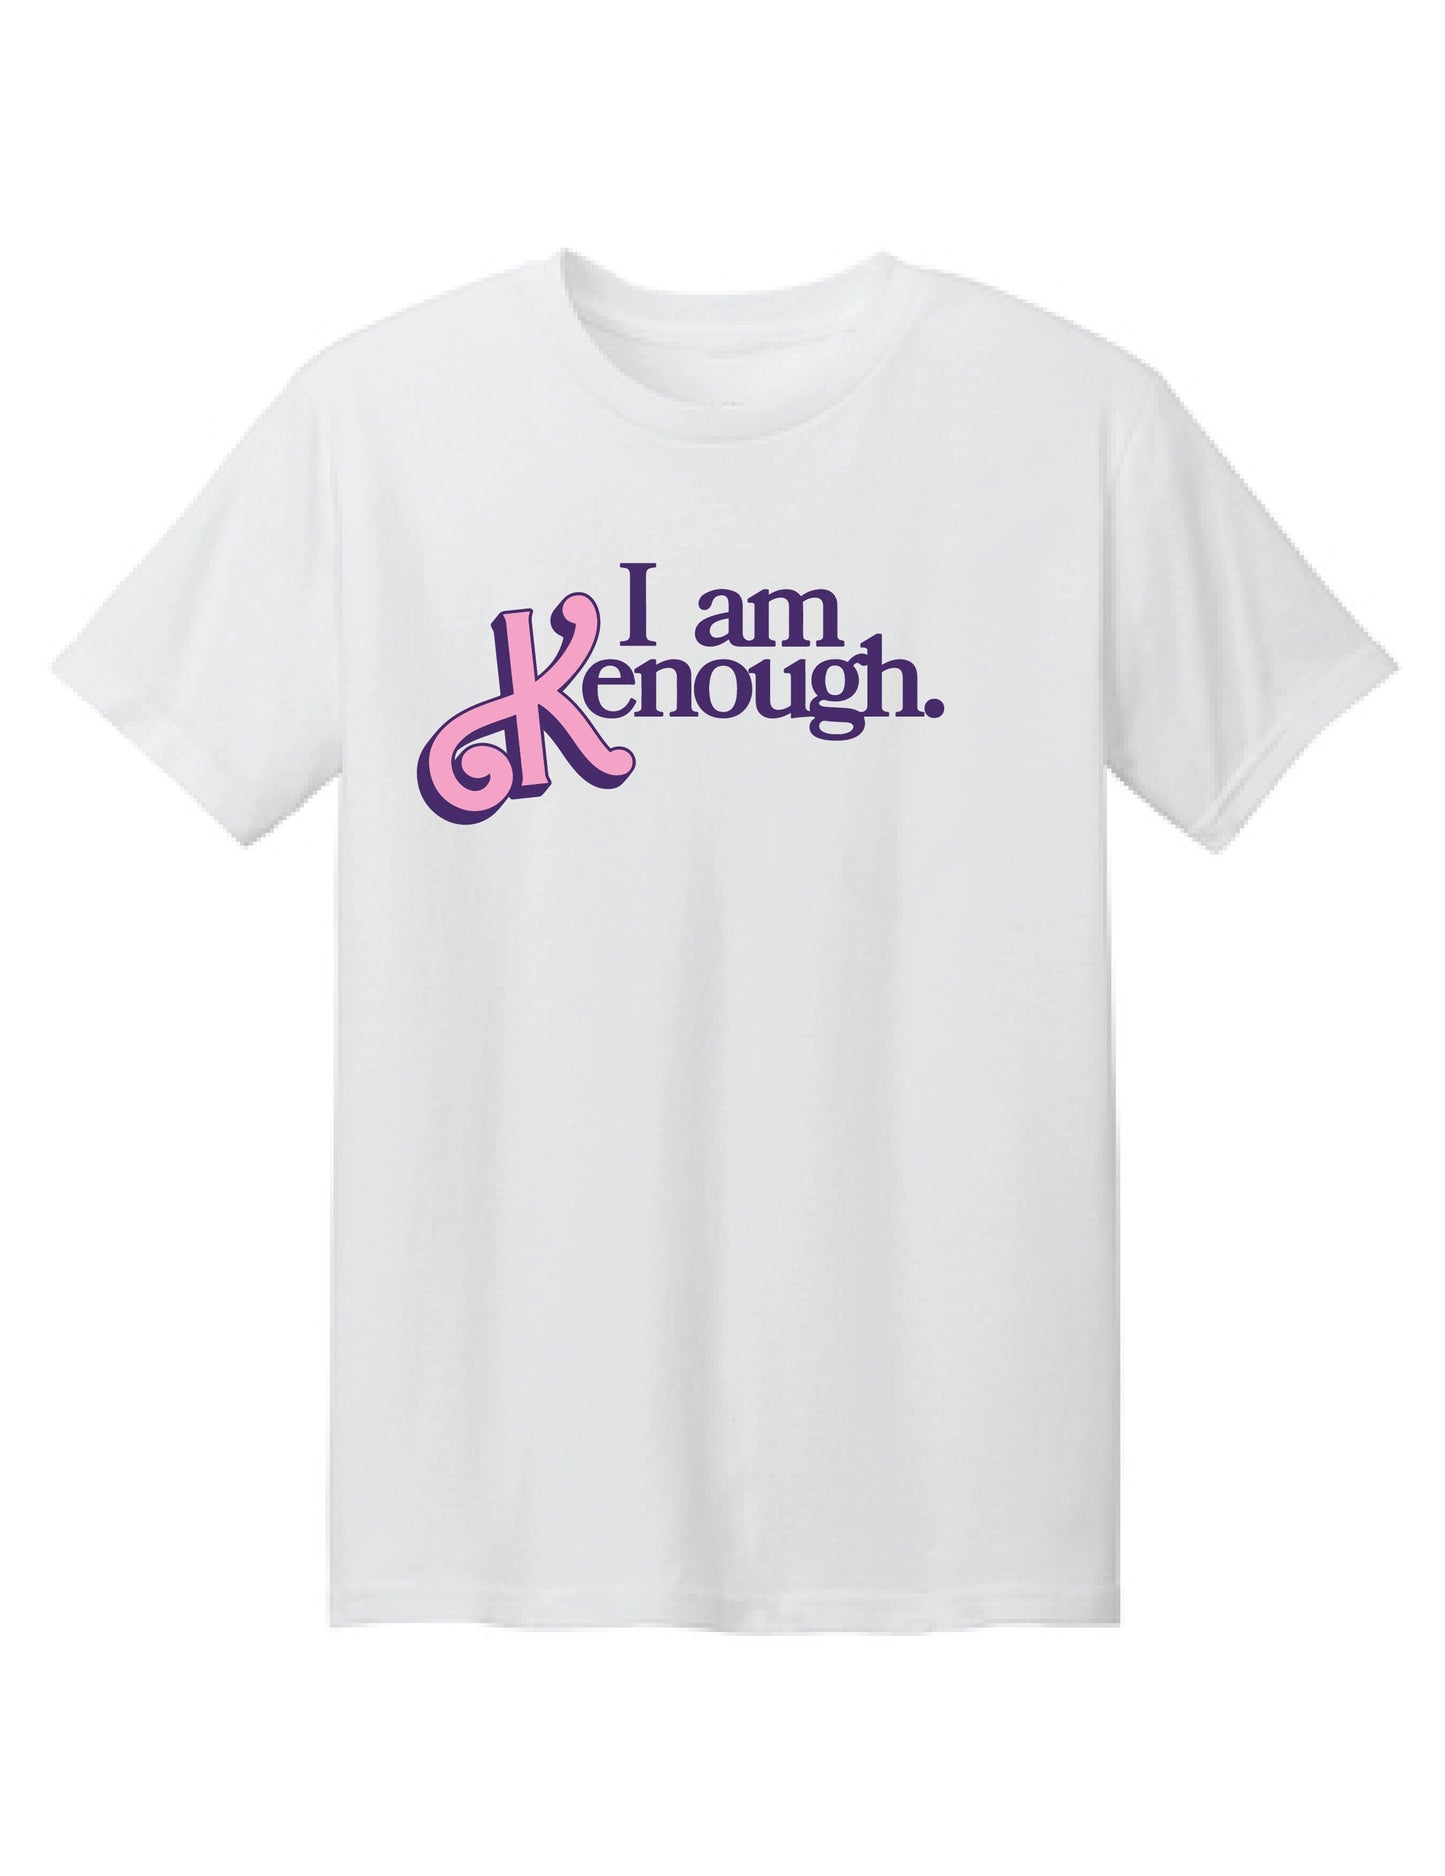 I am Kenough unisex T-shirt, Kenough T-shirt, Ken T-shirt